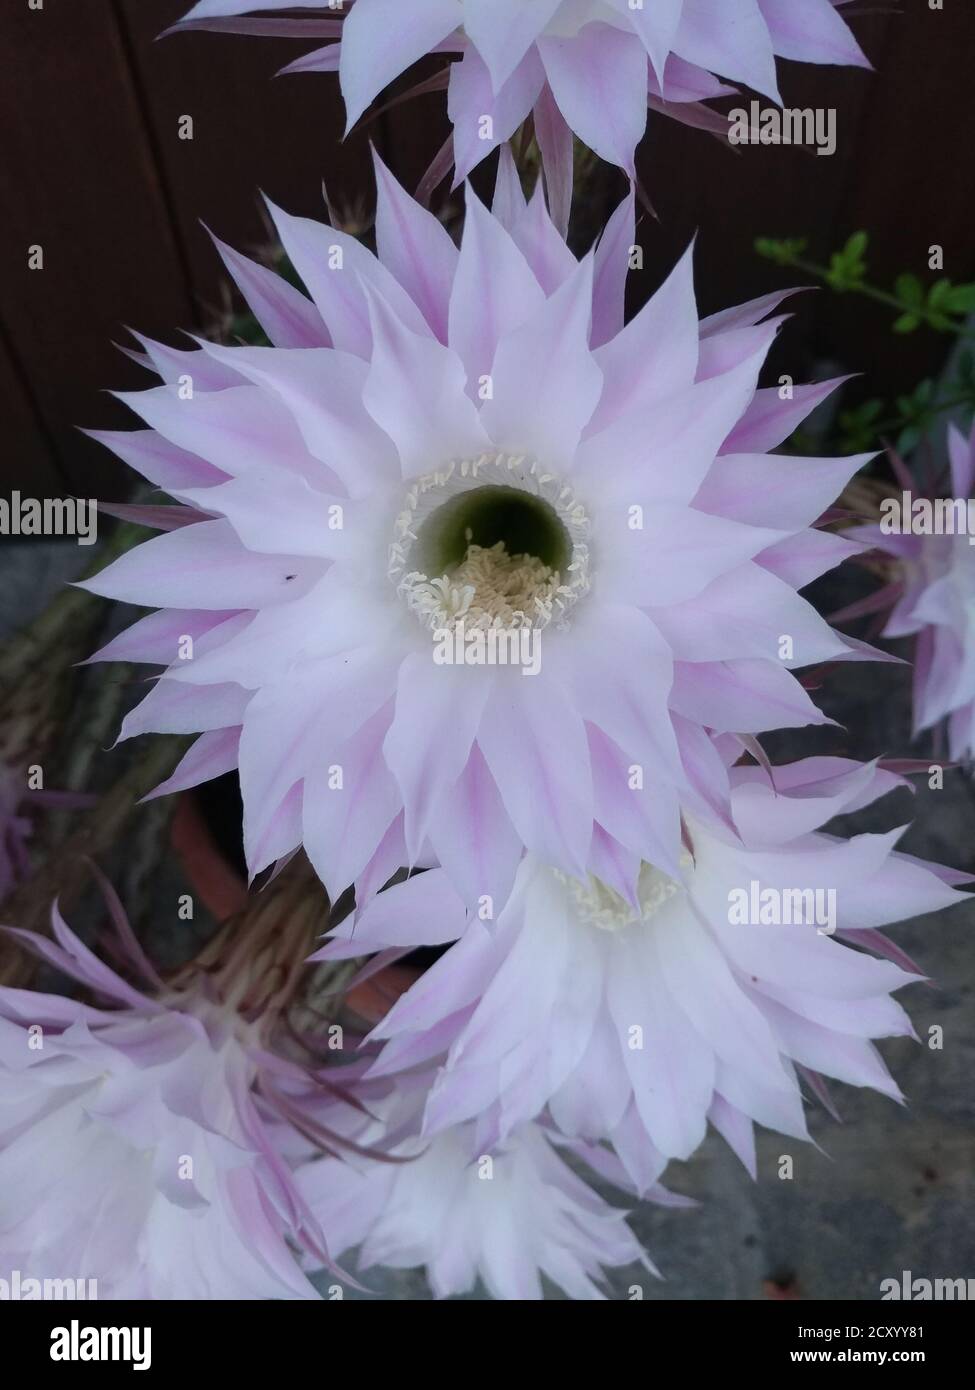 Night-blooming cereus cactus flower sympathy card